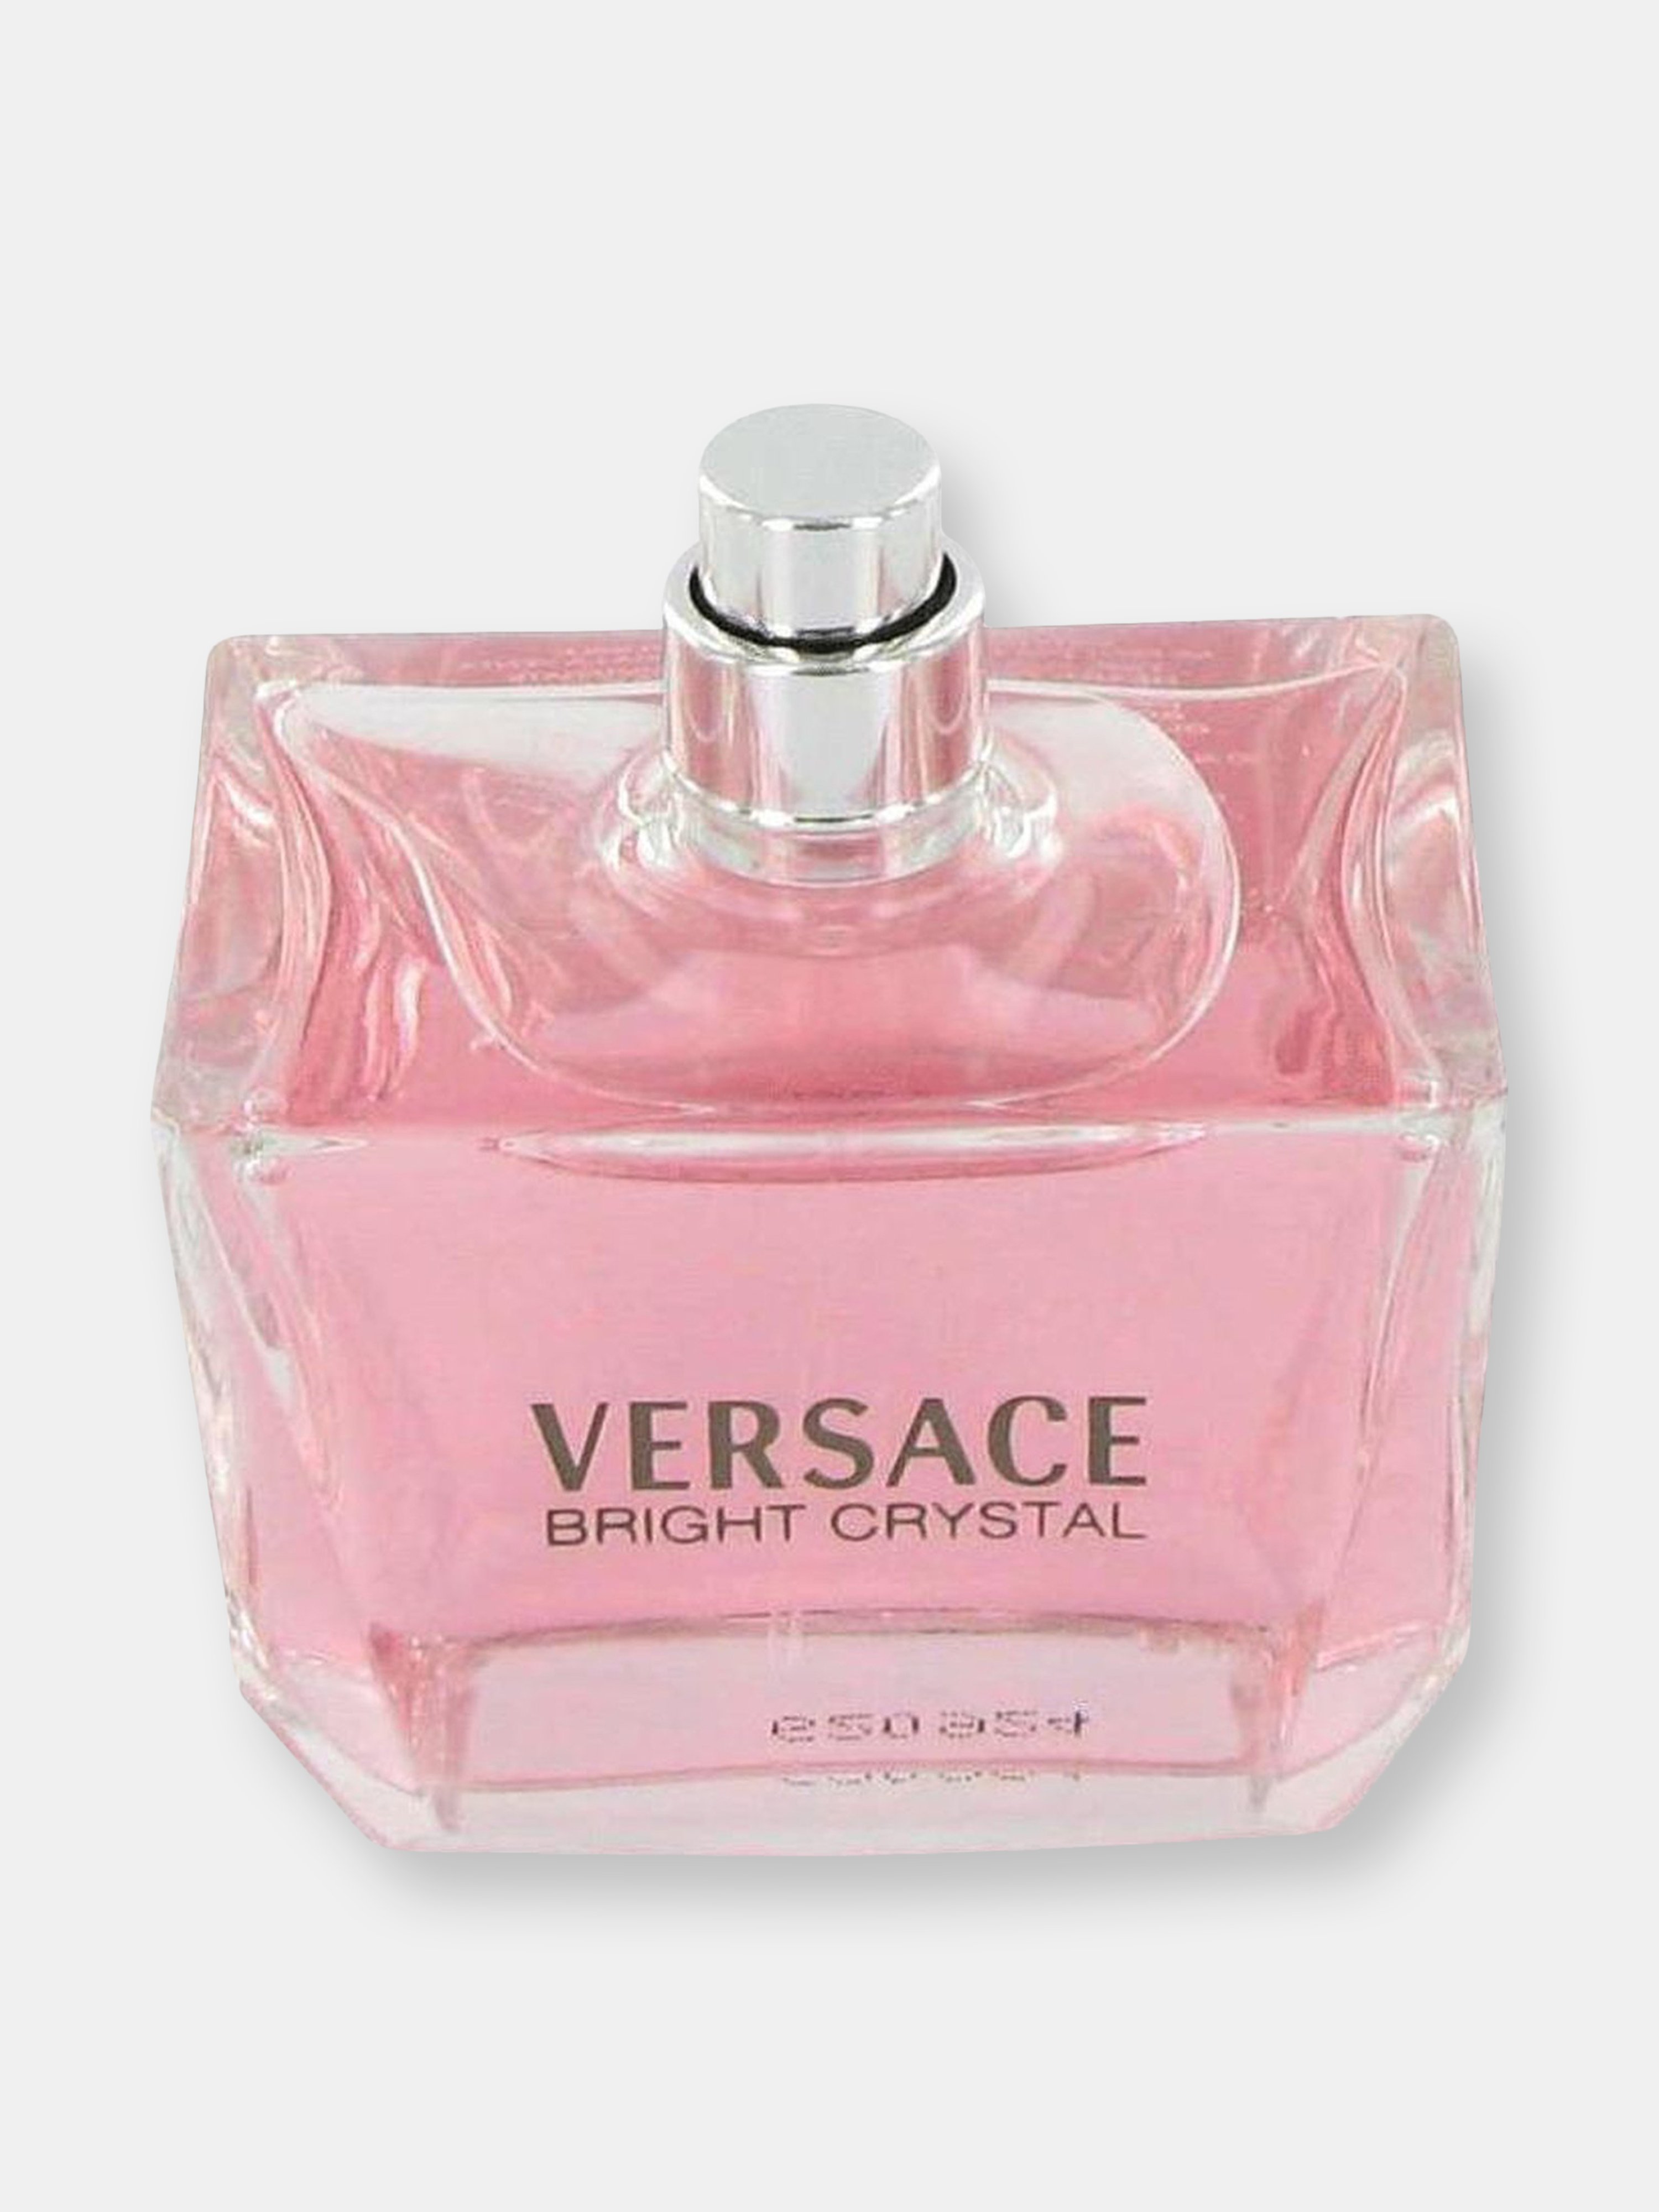 Royall Fragrances Versace Bright Crystal Eau De Toilette Spray